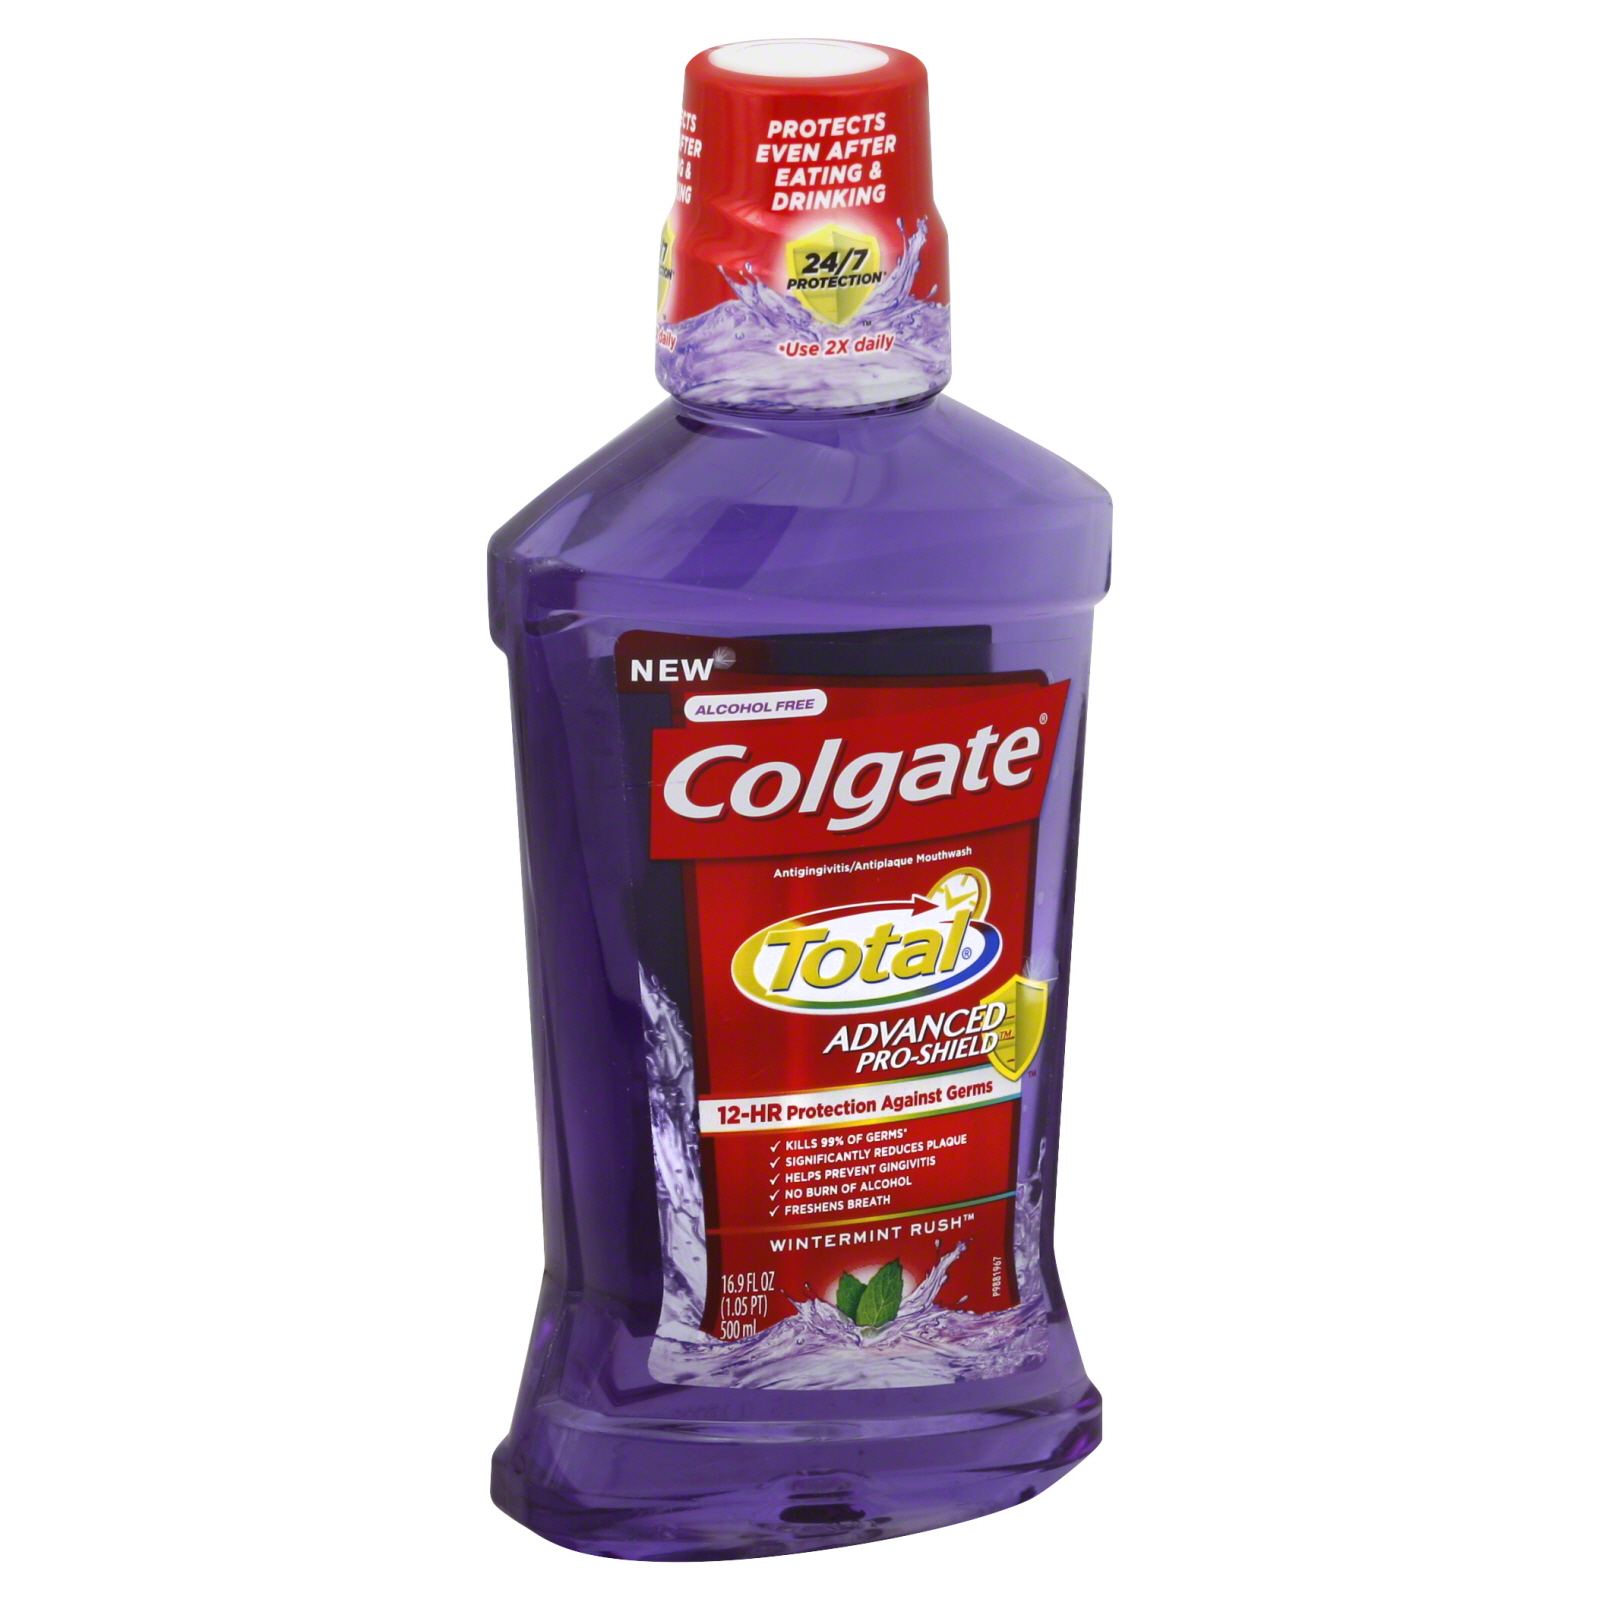 Colgate-Palmolive Total Advanced Pro-Shield Wintermint Rush Mouthwash, 16.9 fl oz